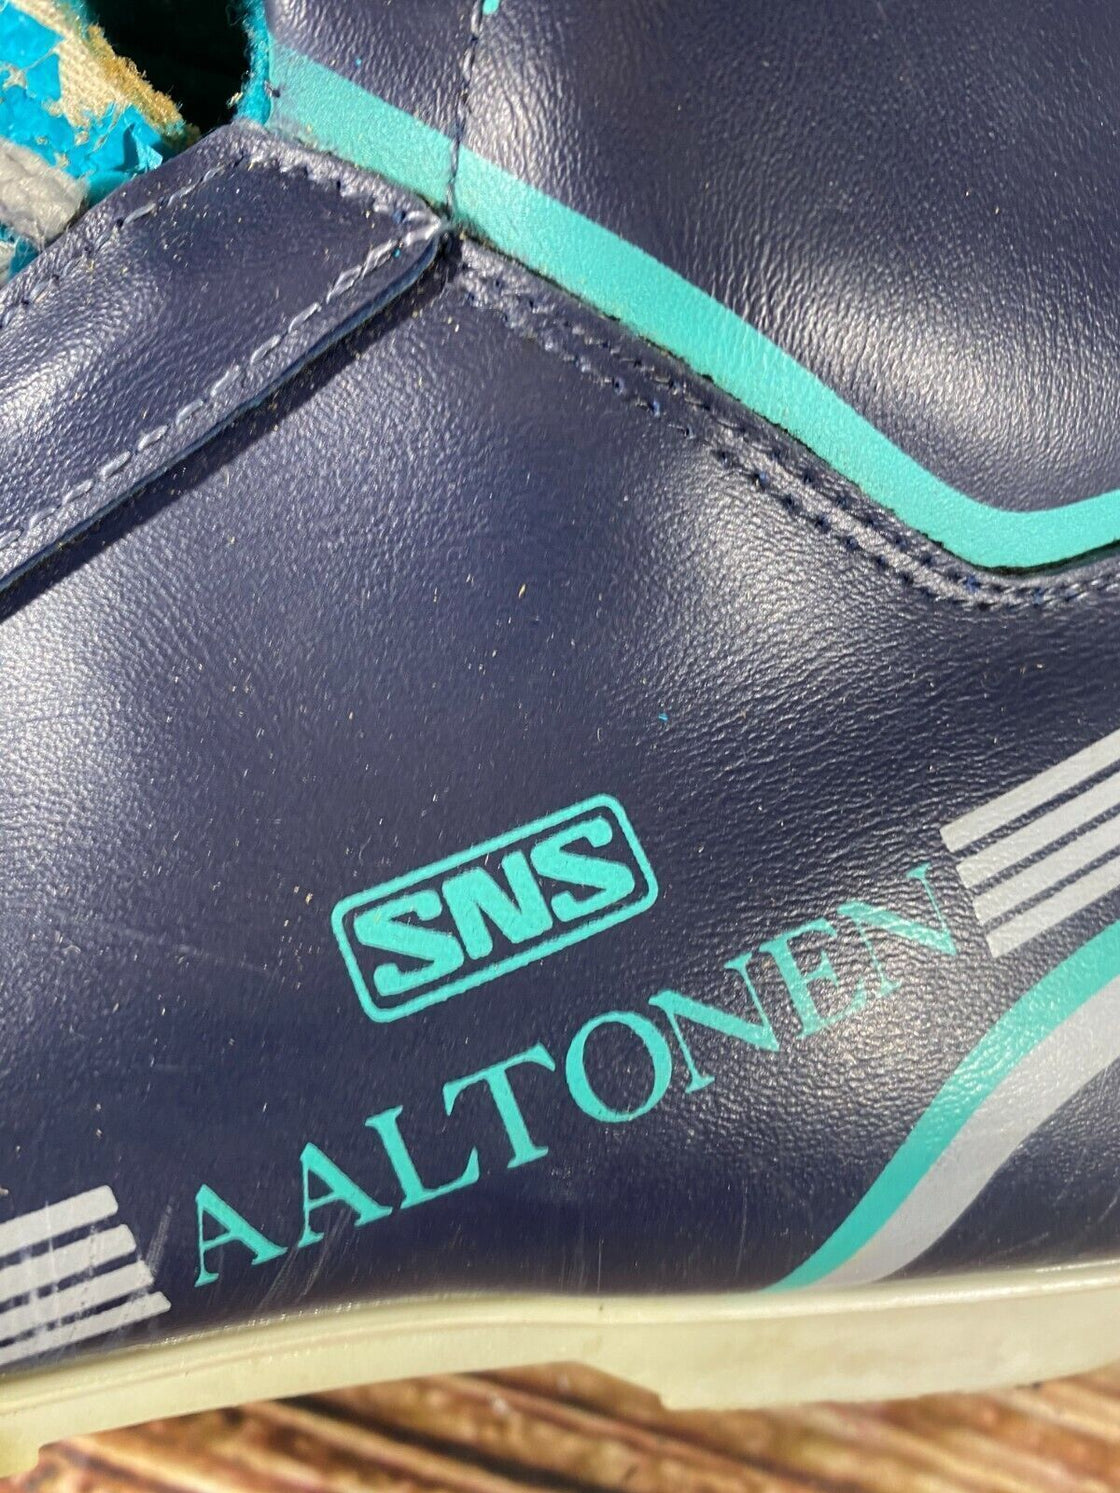 AALTONEN Nordic Cross Country Ski Boots Ladies Size EU37 US5 SNS Old Profil